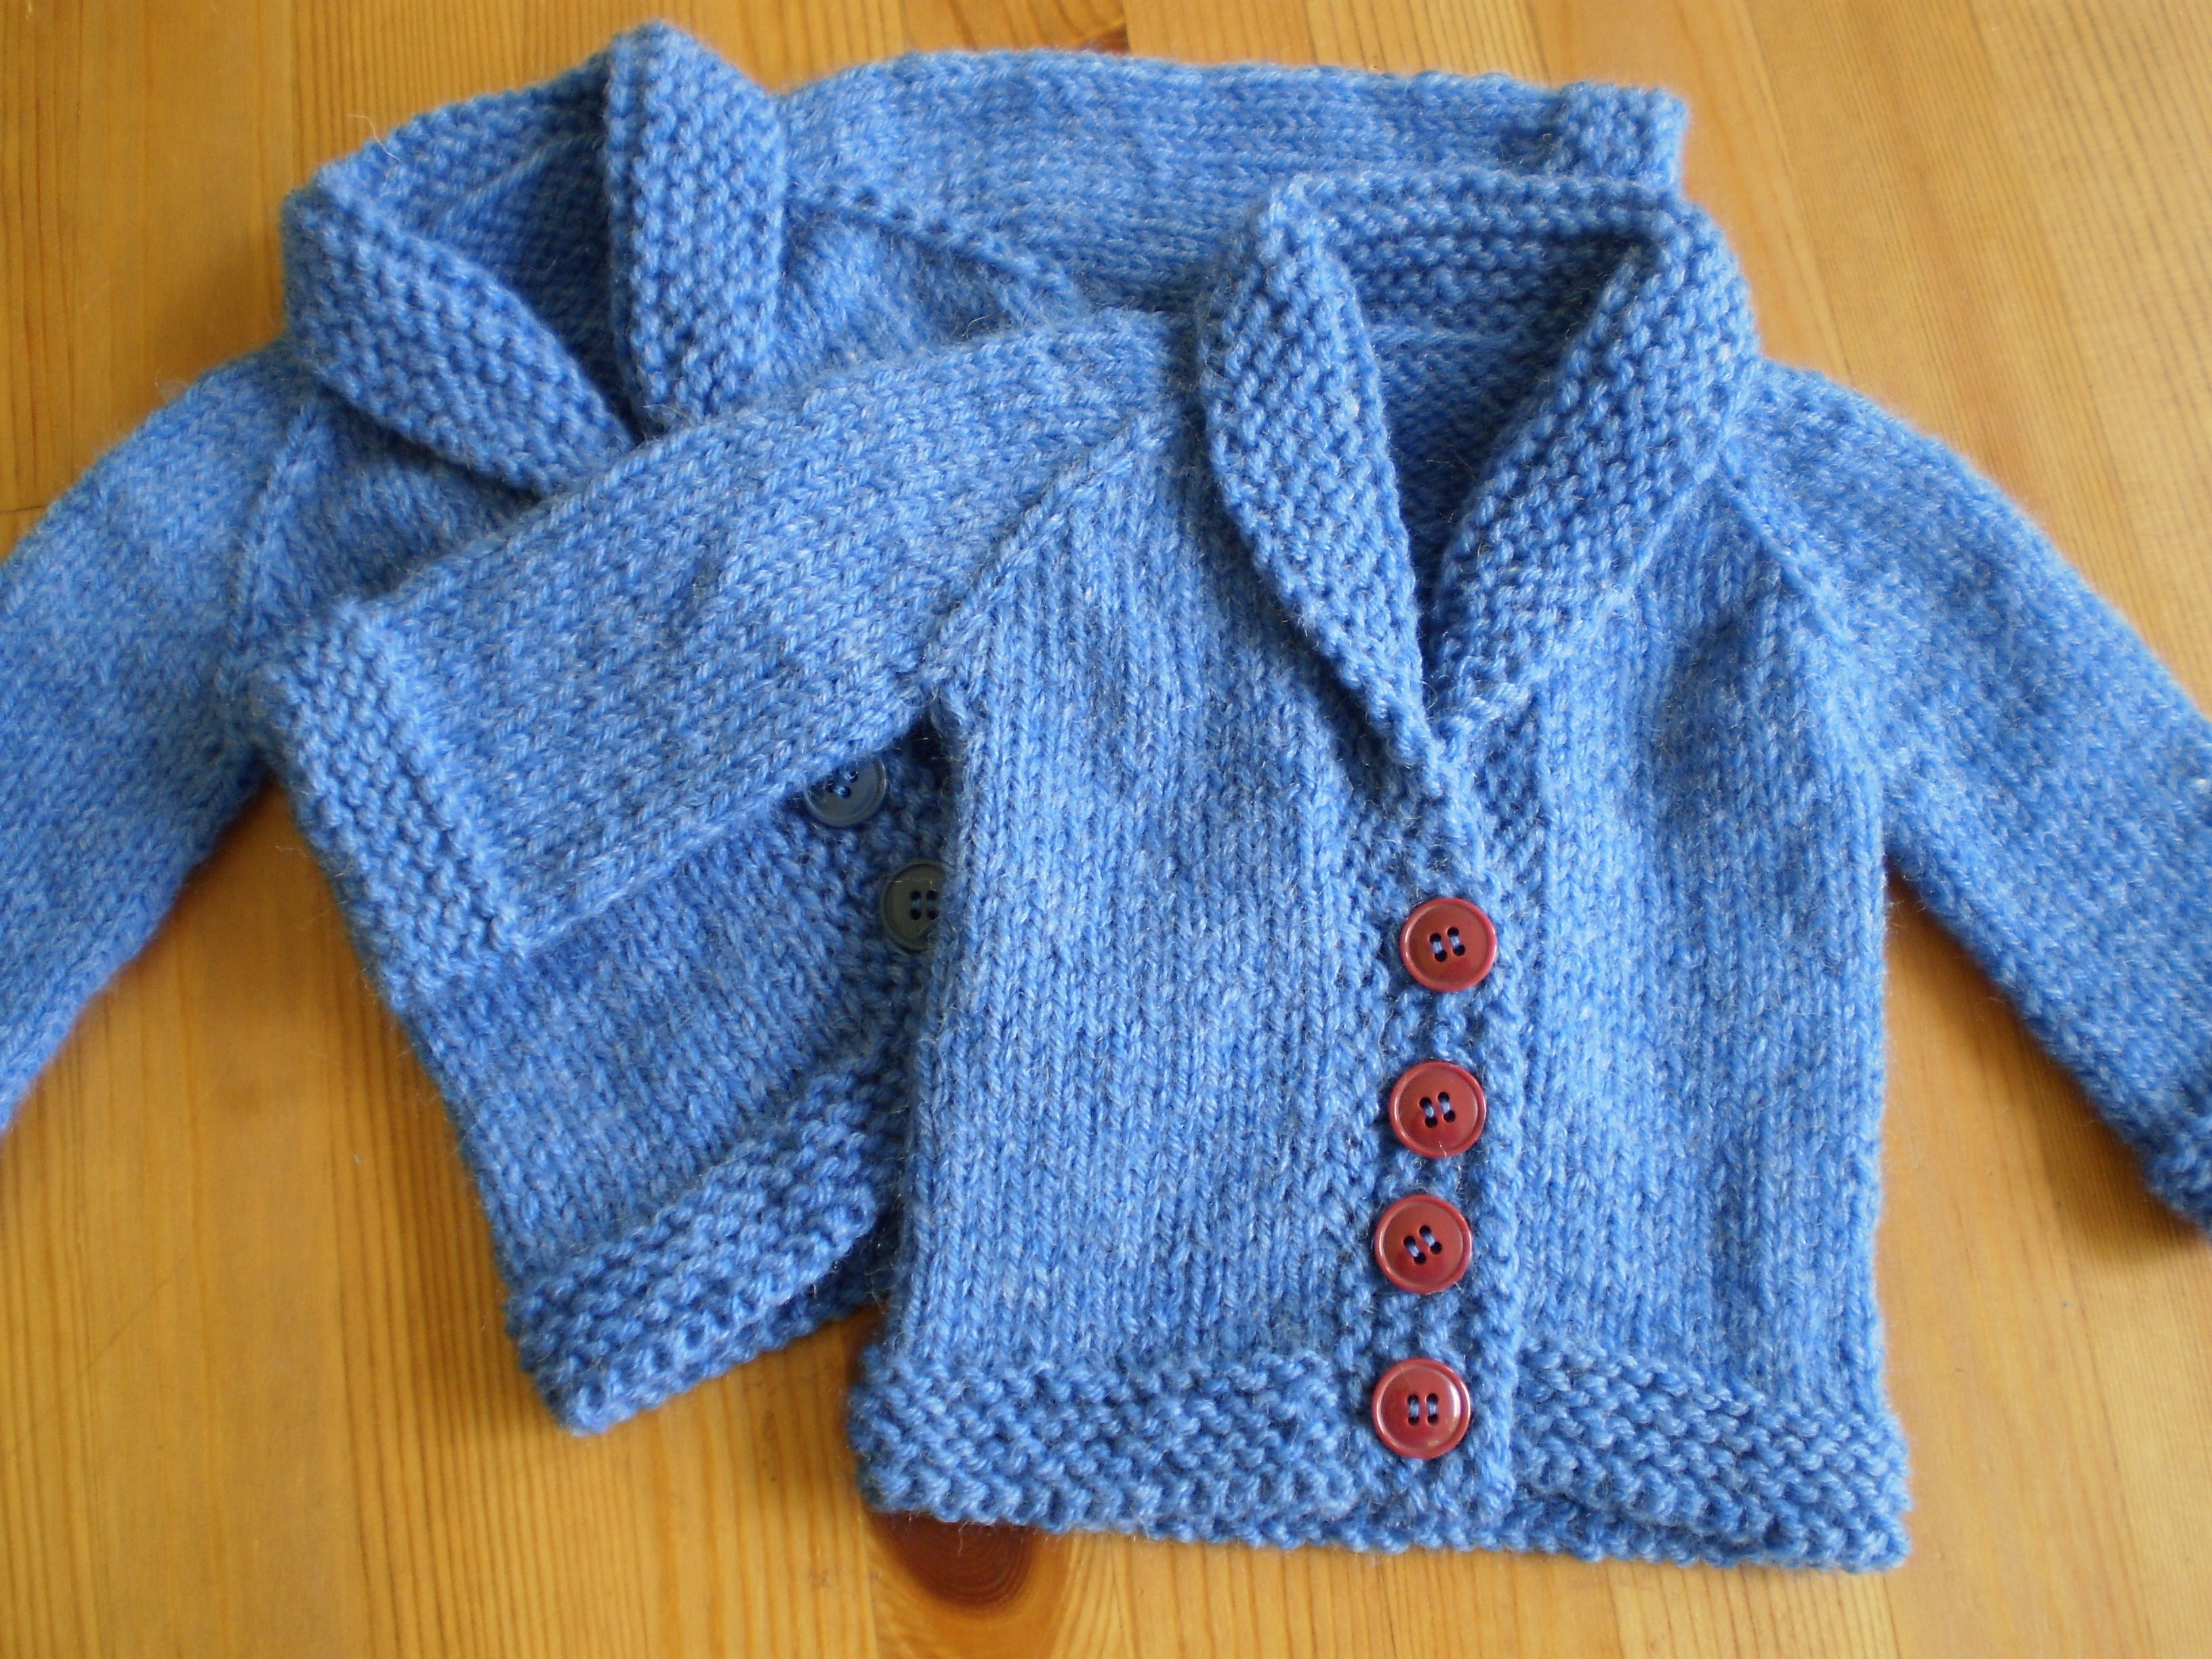 Knitting Pattern Free Download Easy Knitting Patterns Free Download Crochet And Knit Shawl